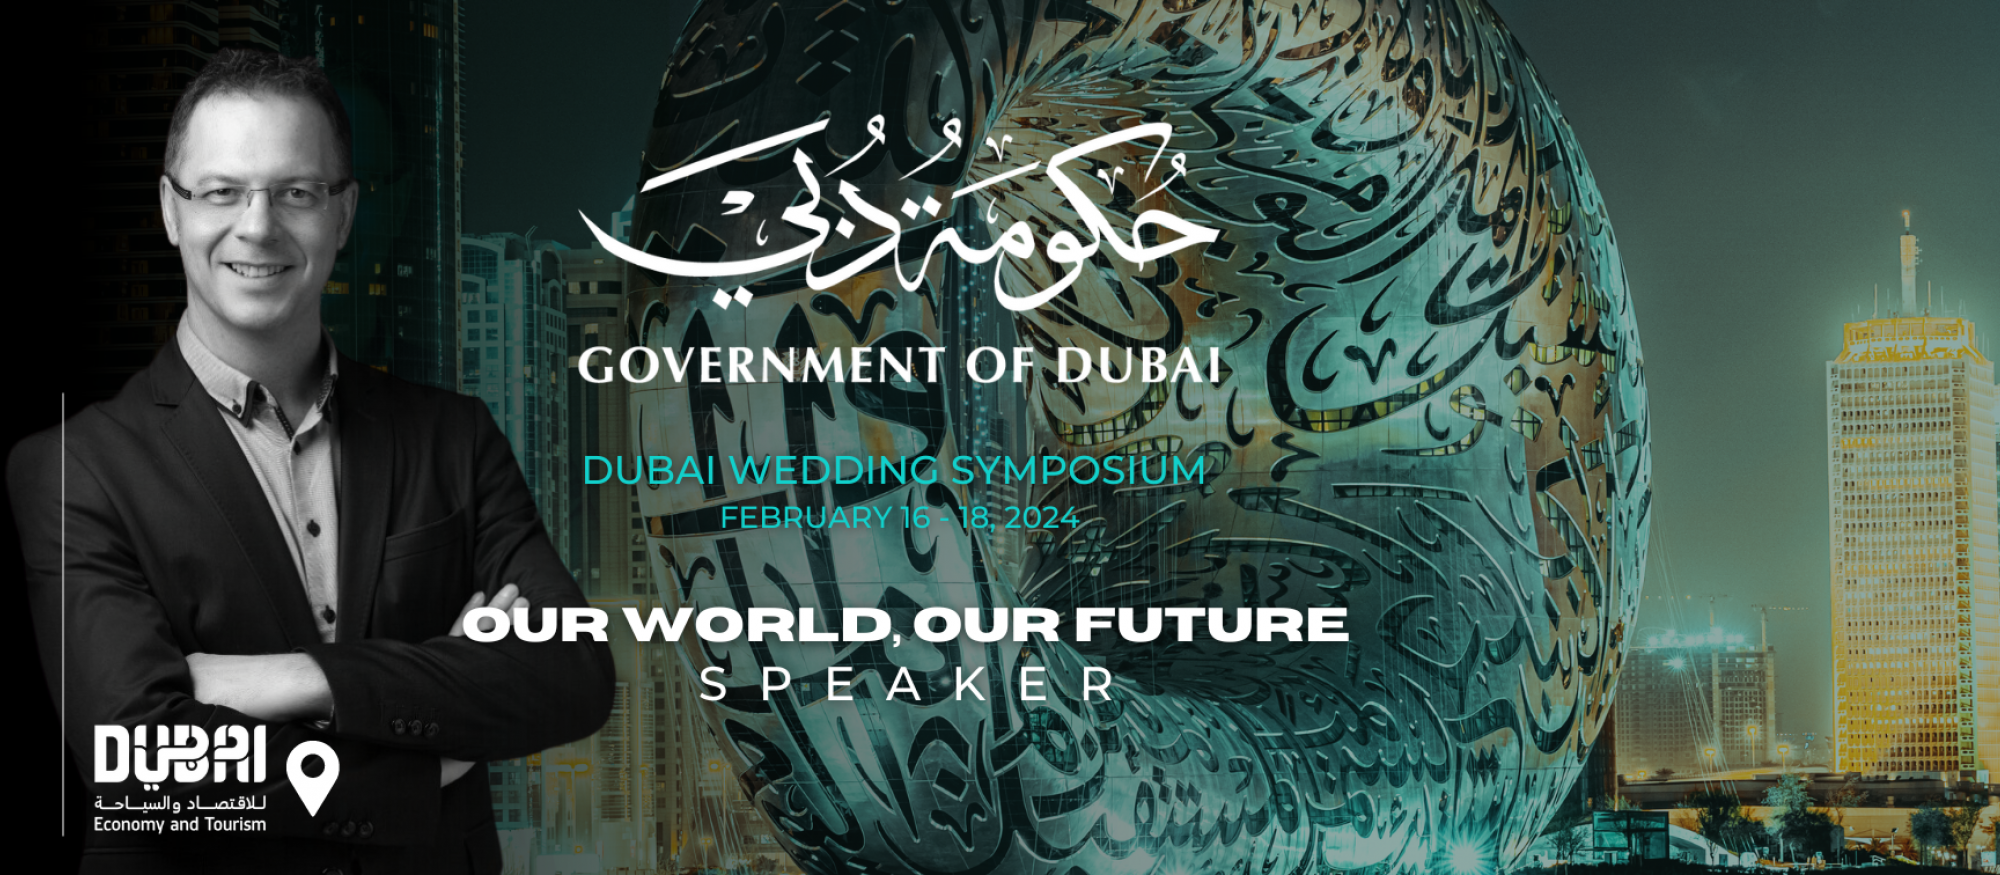 SPEAKER at the Dubai Wedding Symposium, February 16 - 18, 2024